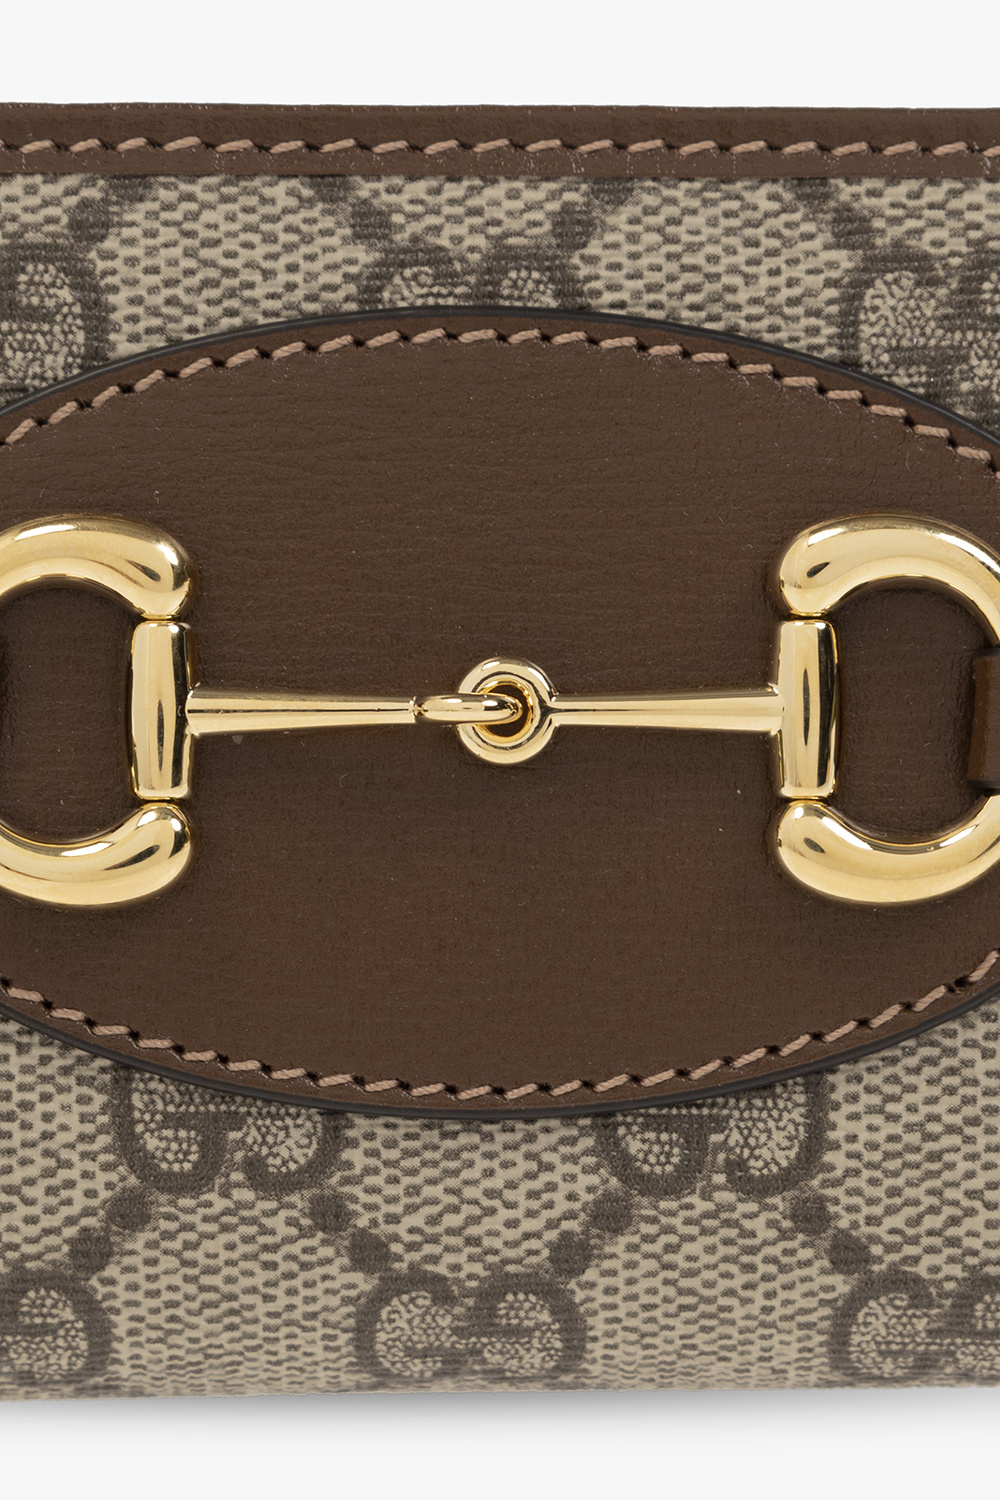 gucci trousers ‘Horsebit 1955’ wallet